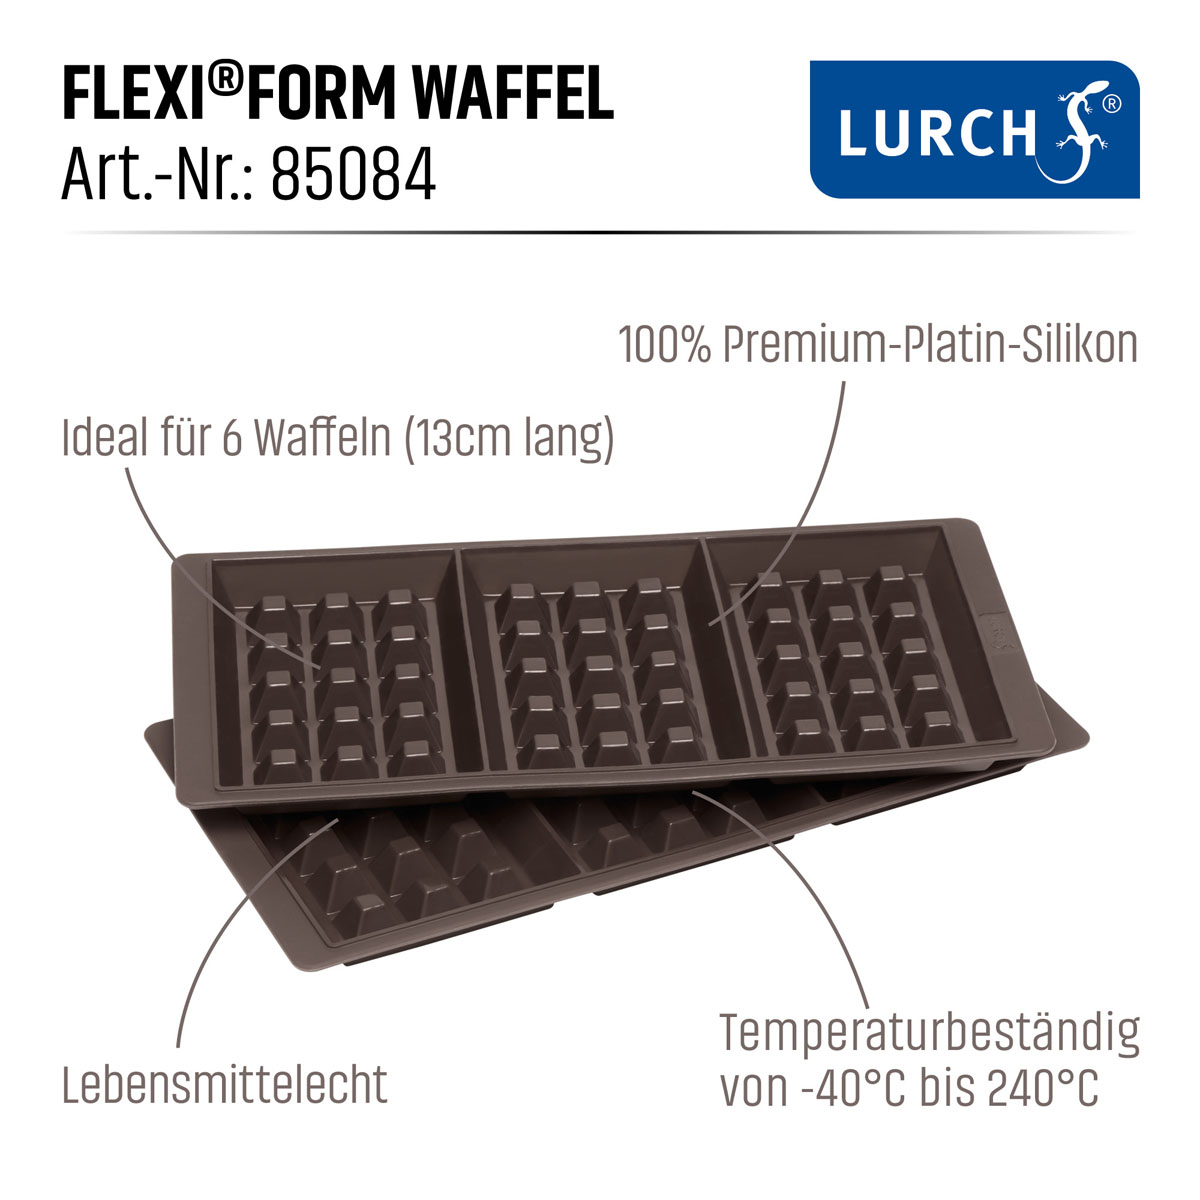 LURCH FlexiForm Waffle 29x14,5cm 3cavity 2pcs set brown